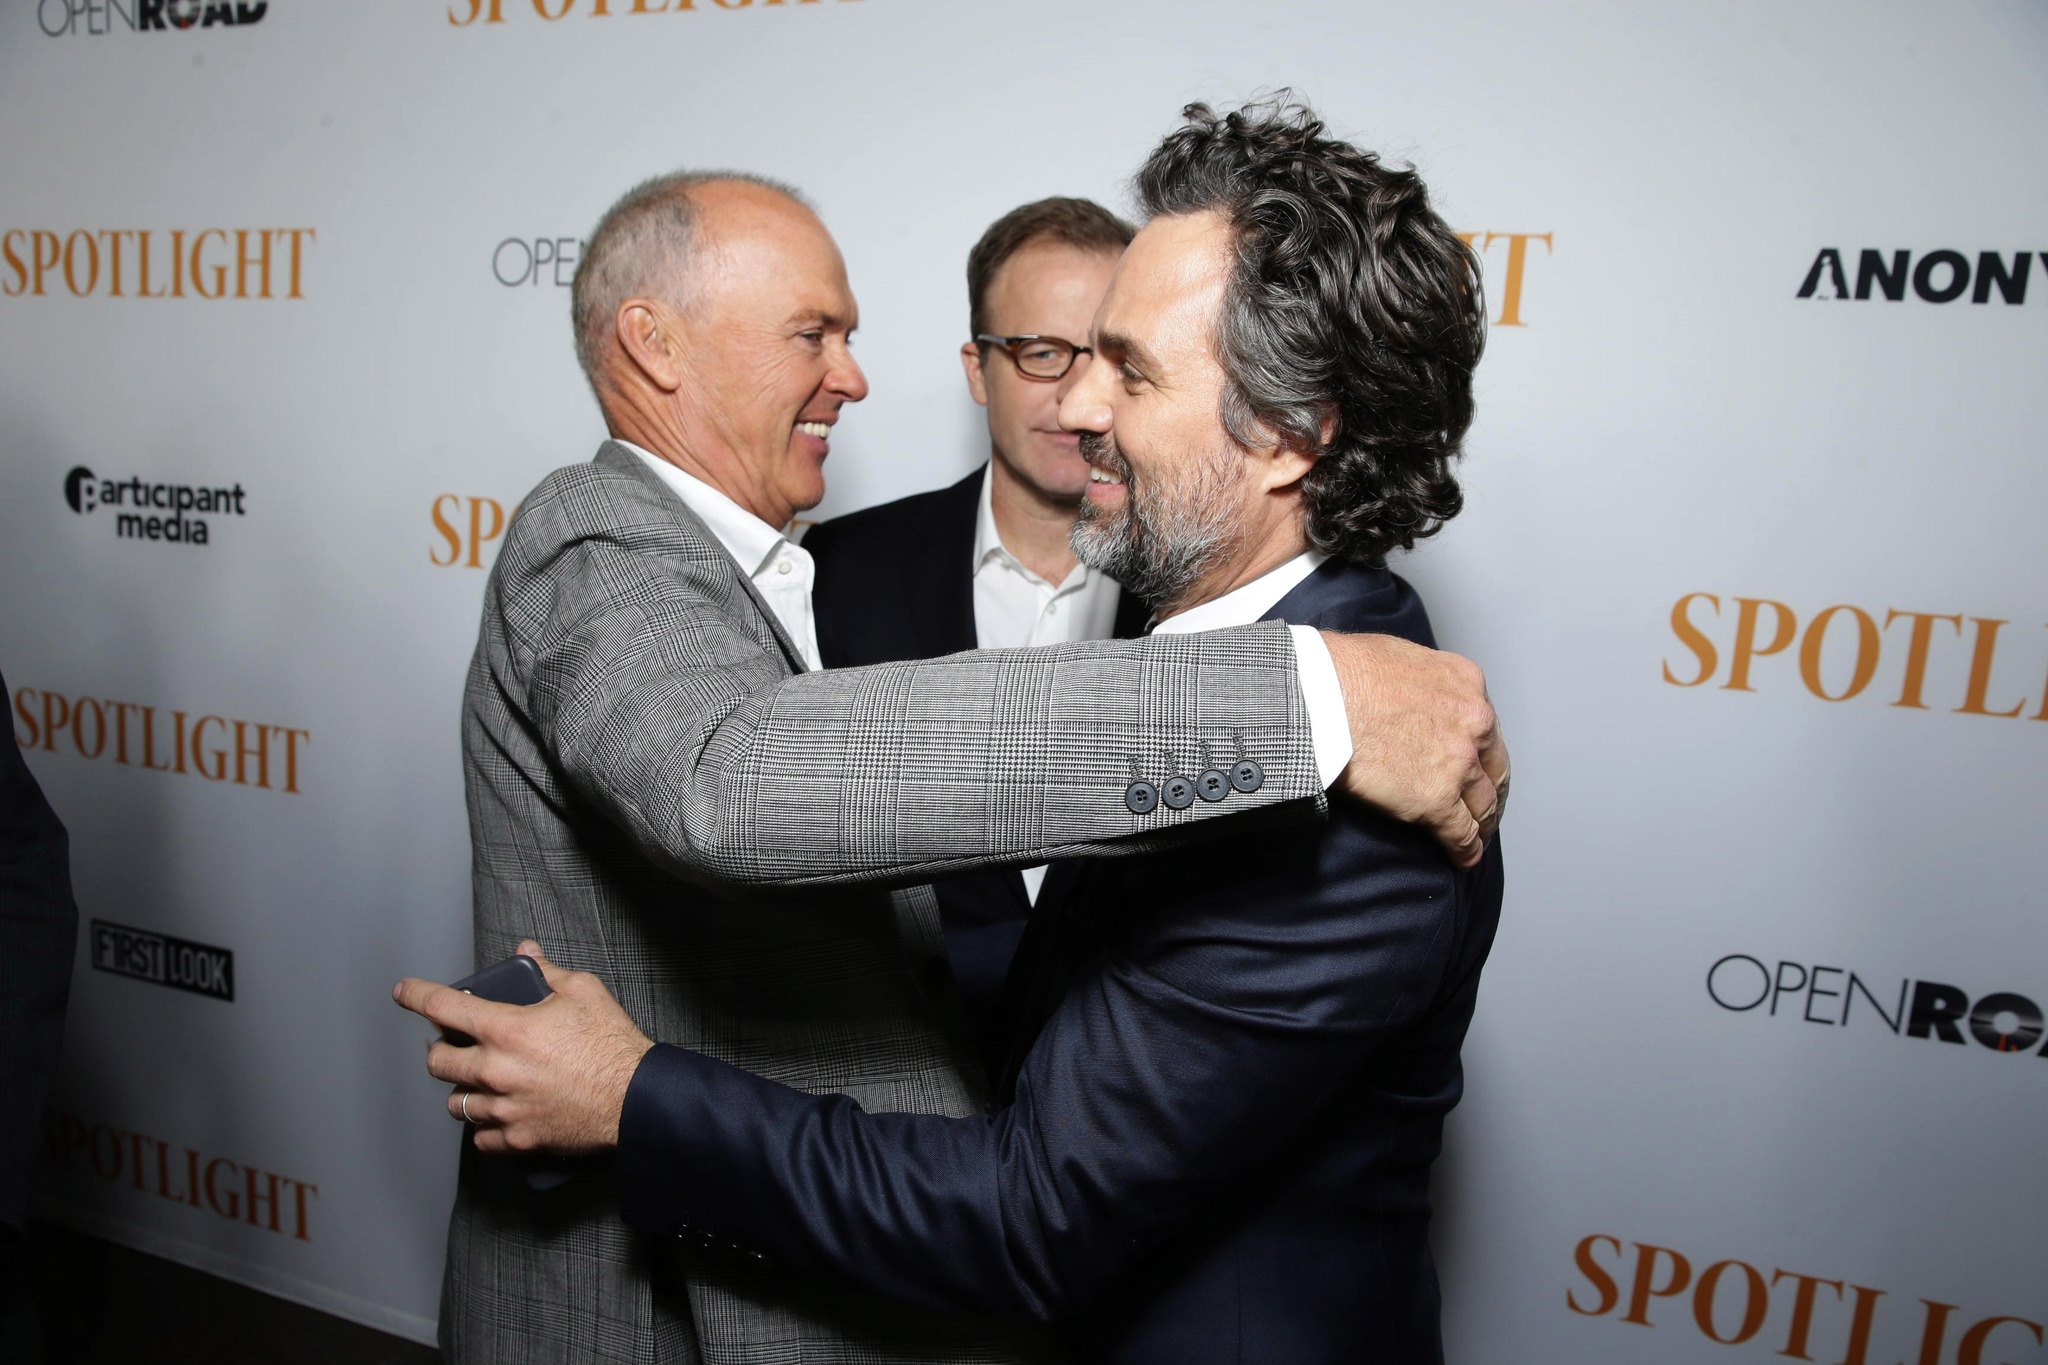 Michael Keaton, Tom McCarthy and Mark Ruffalo at event of Sensacija (2015)